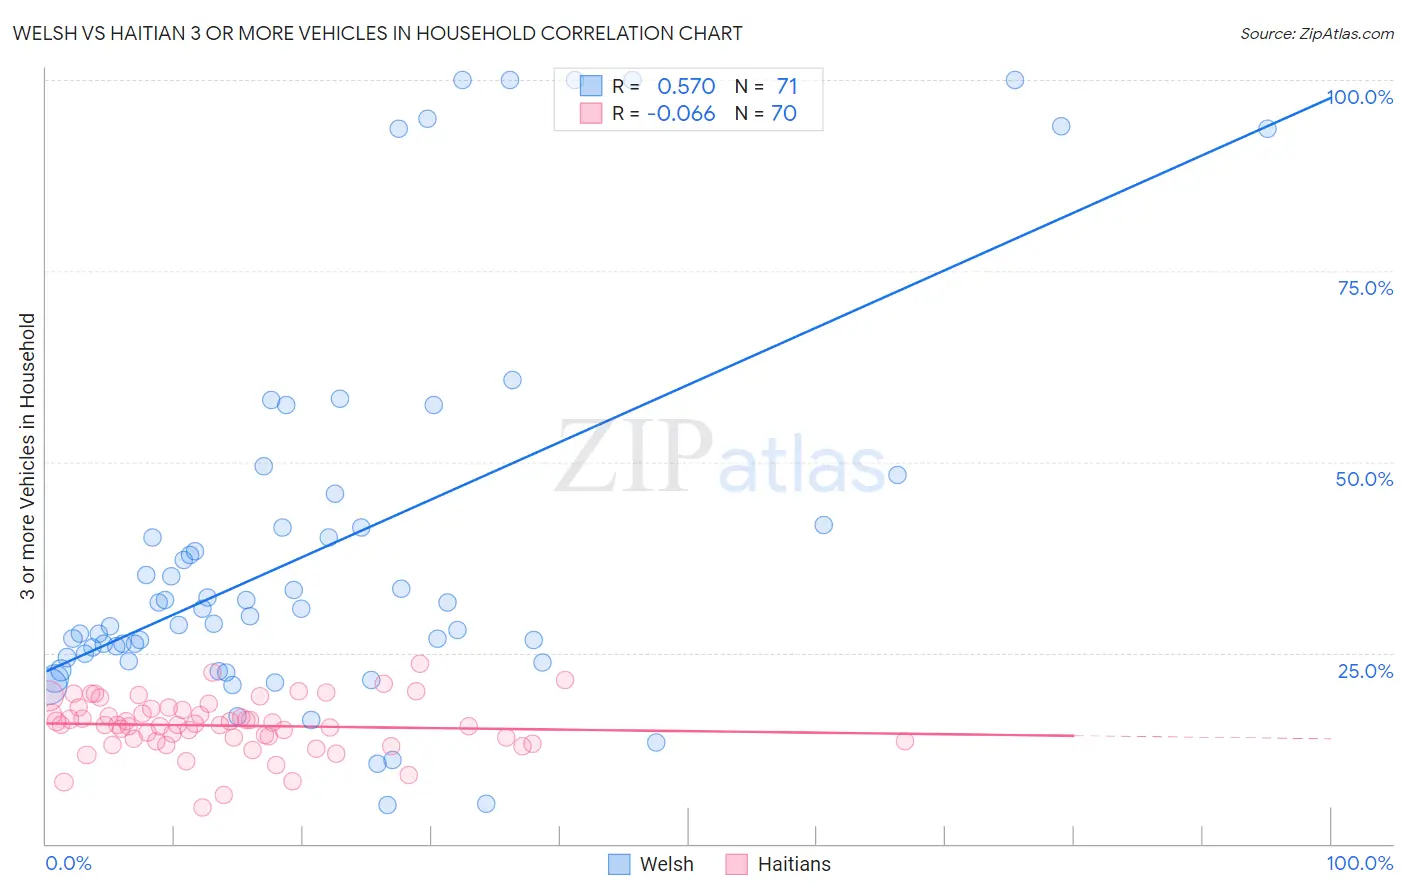 Welsh vs Haitian 3 or more Vehicles in Household